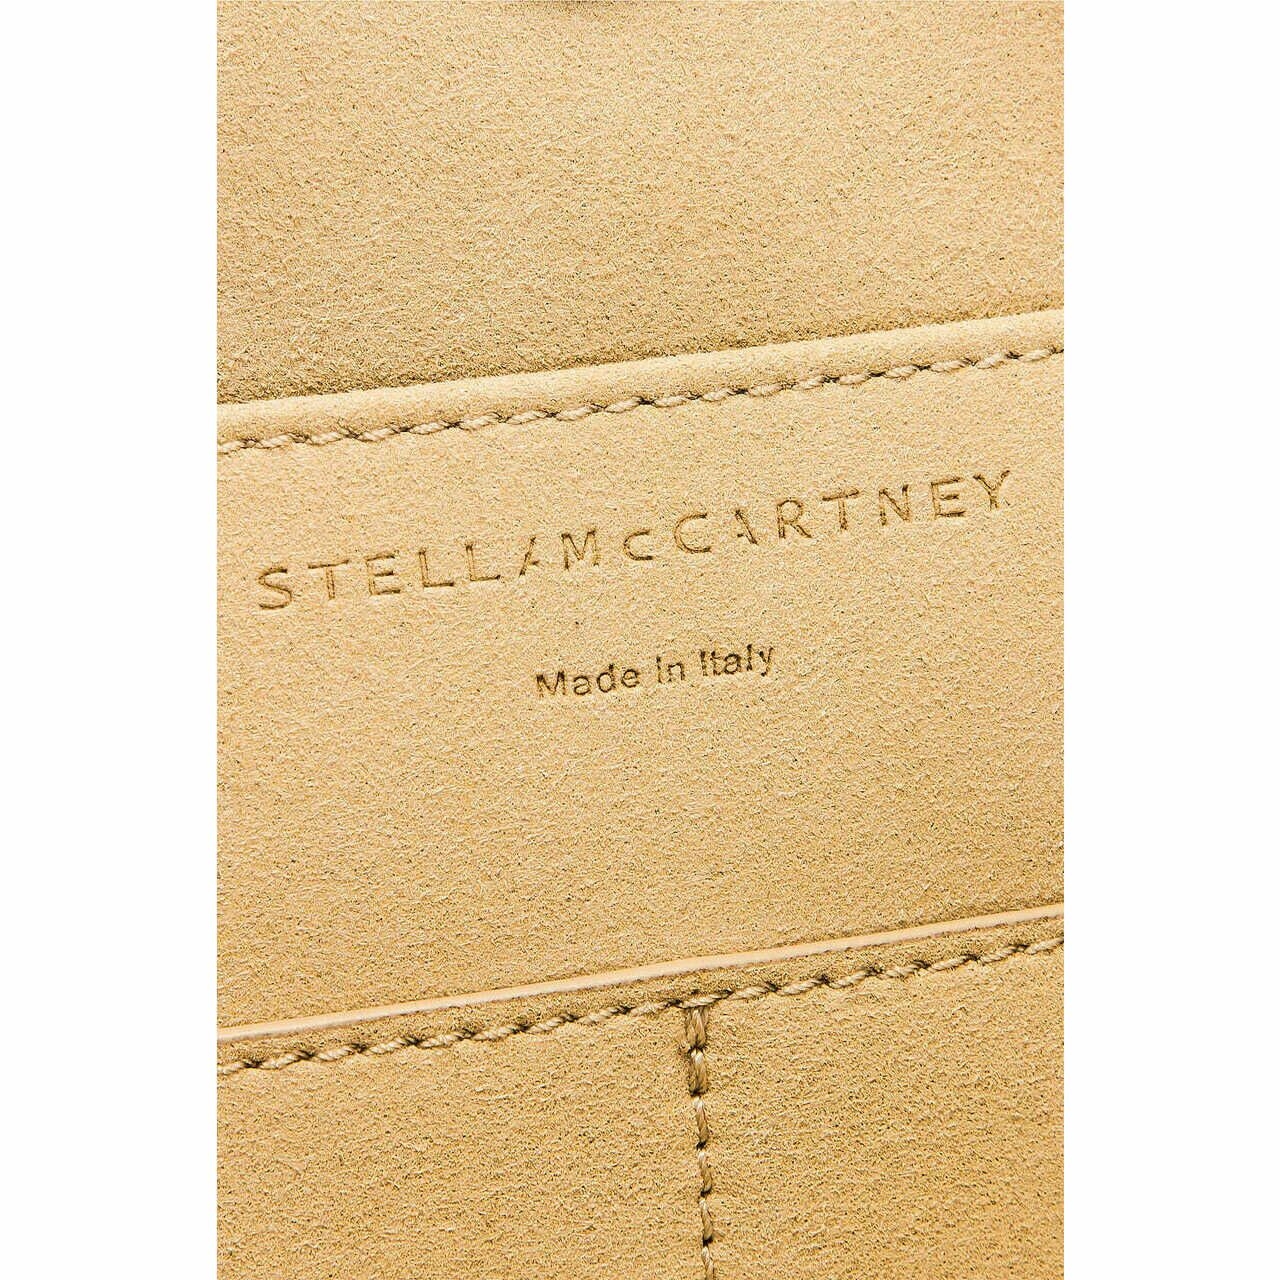 Stella McCartney Black Tote Bag